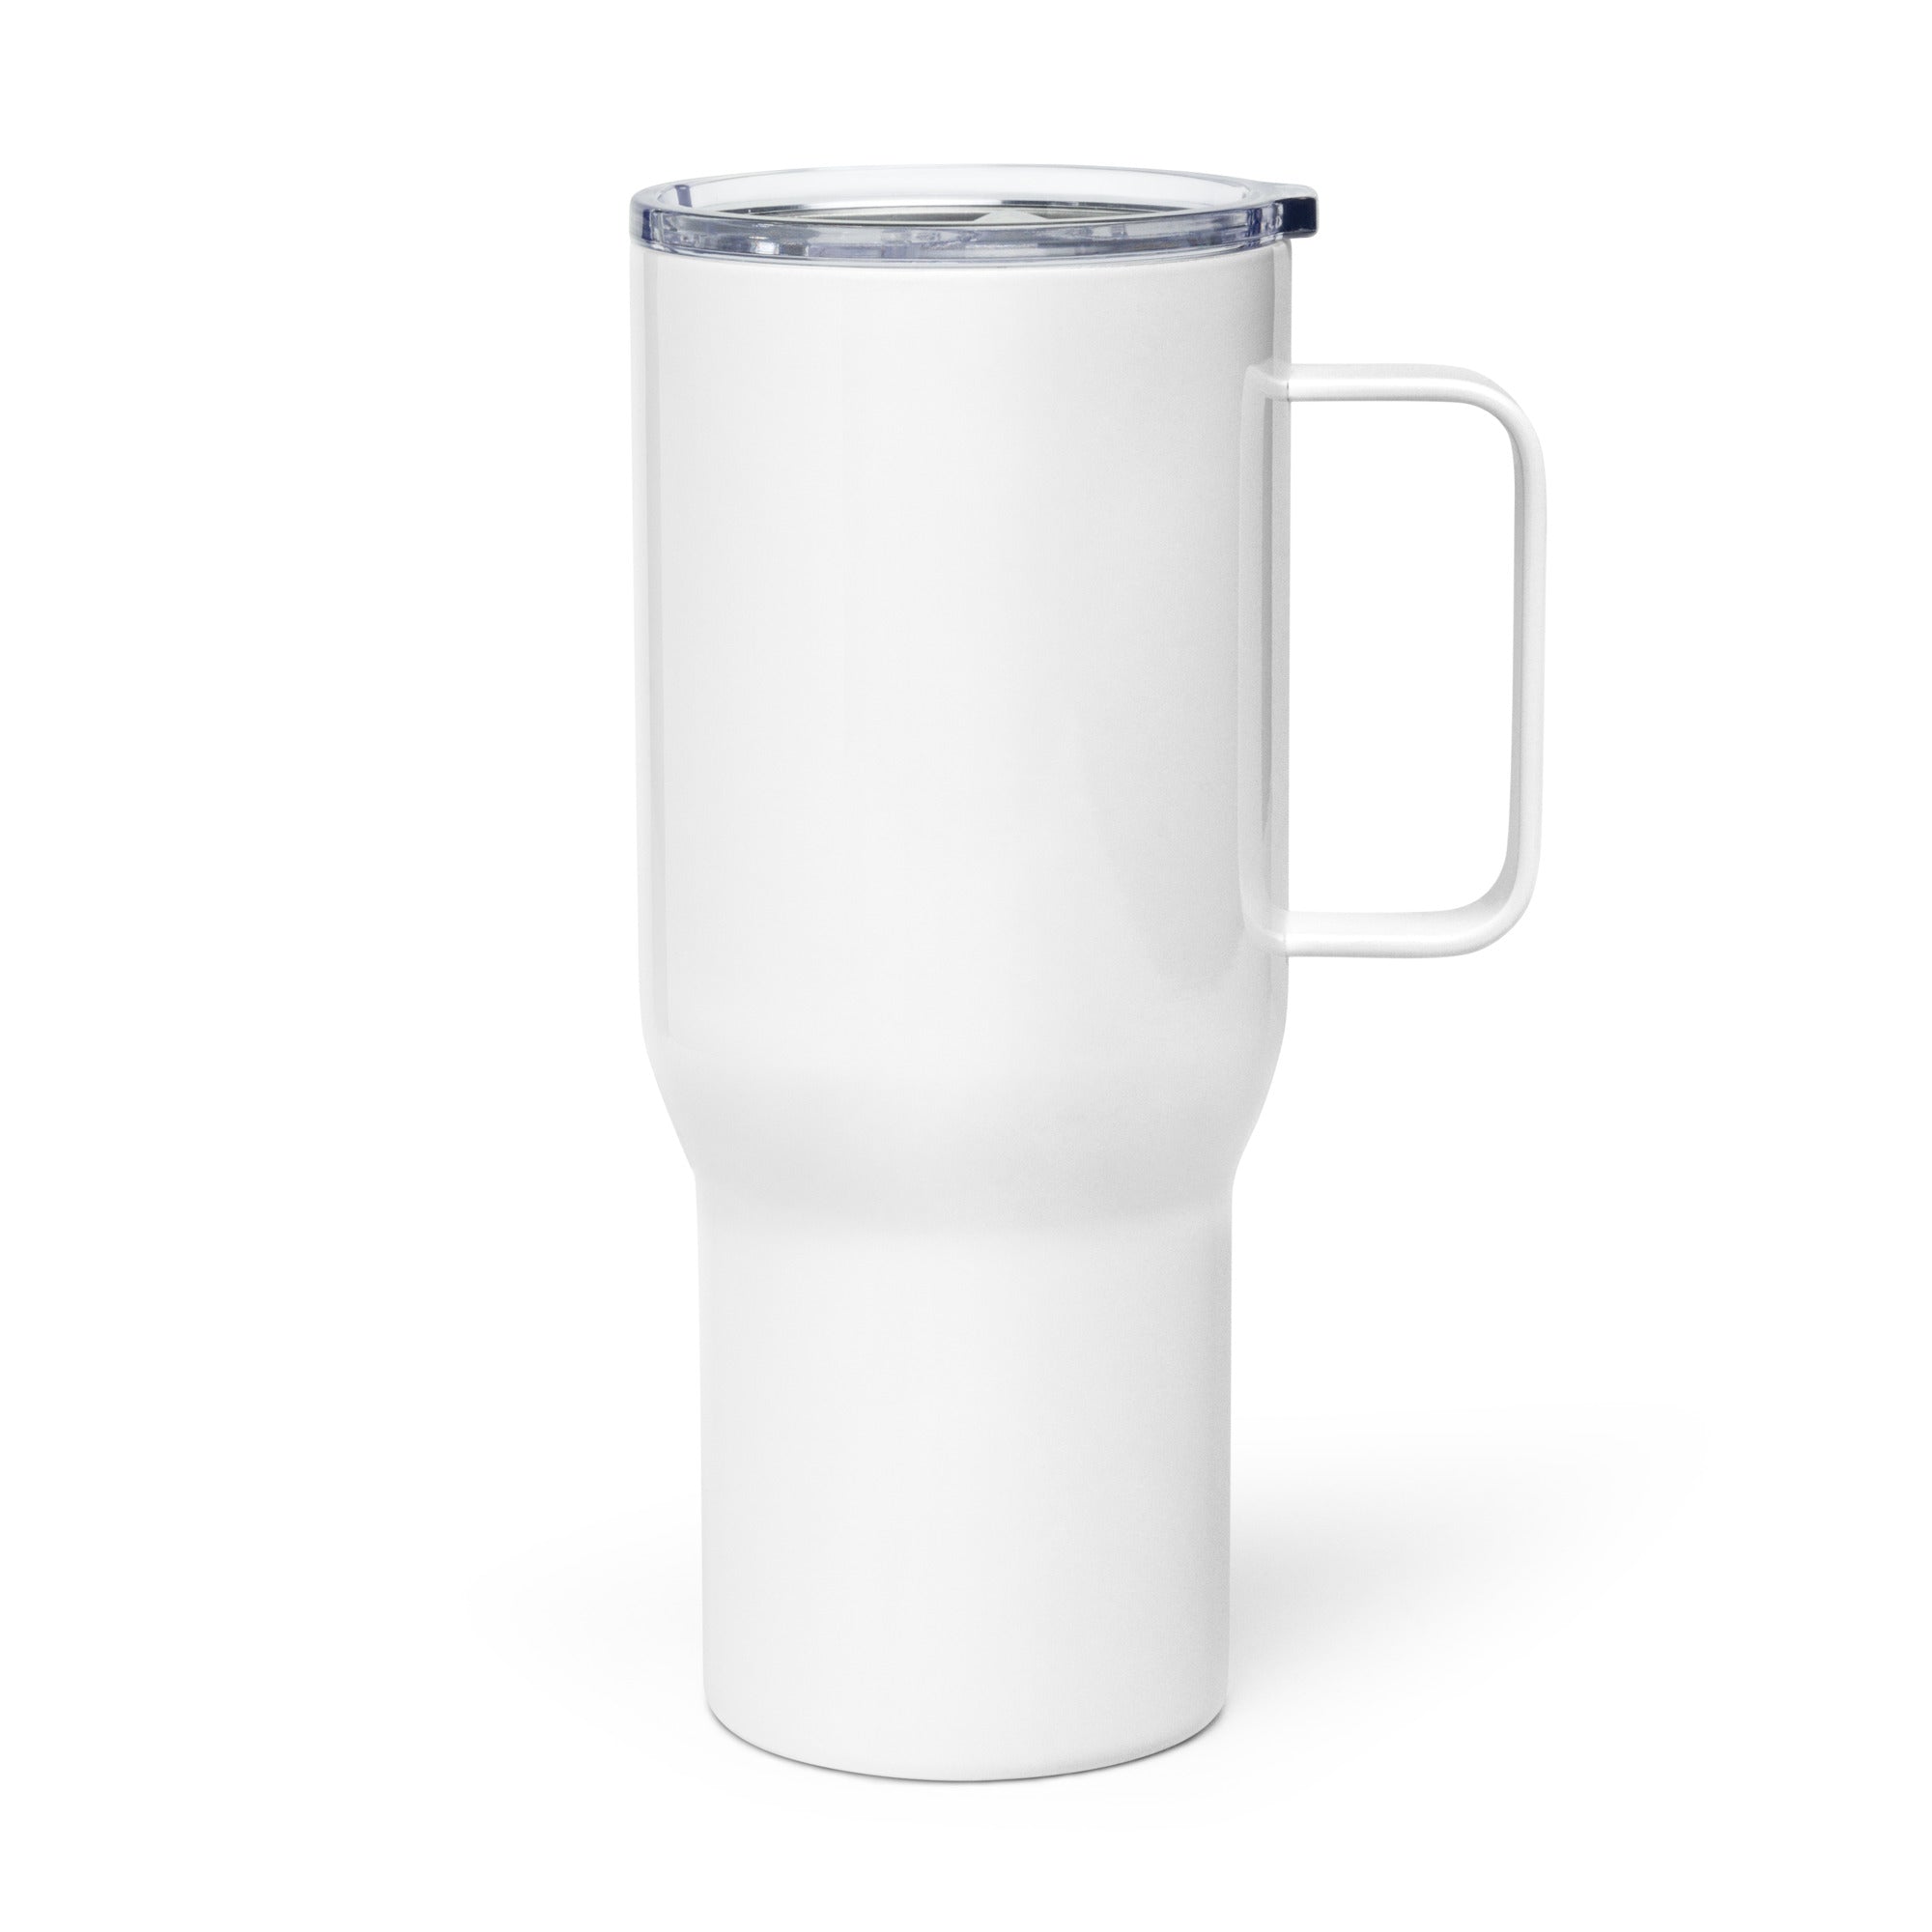 WK Travel mug with a handle